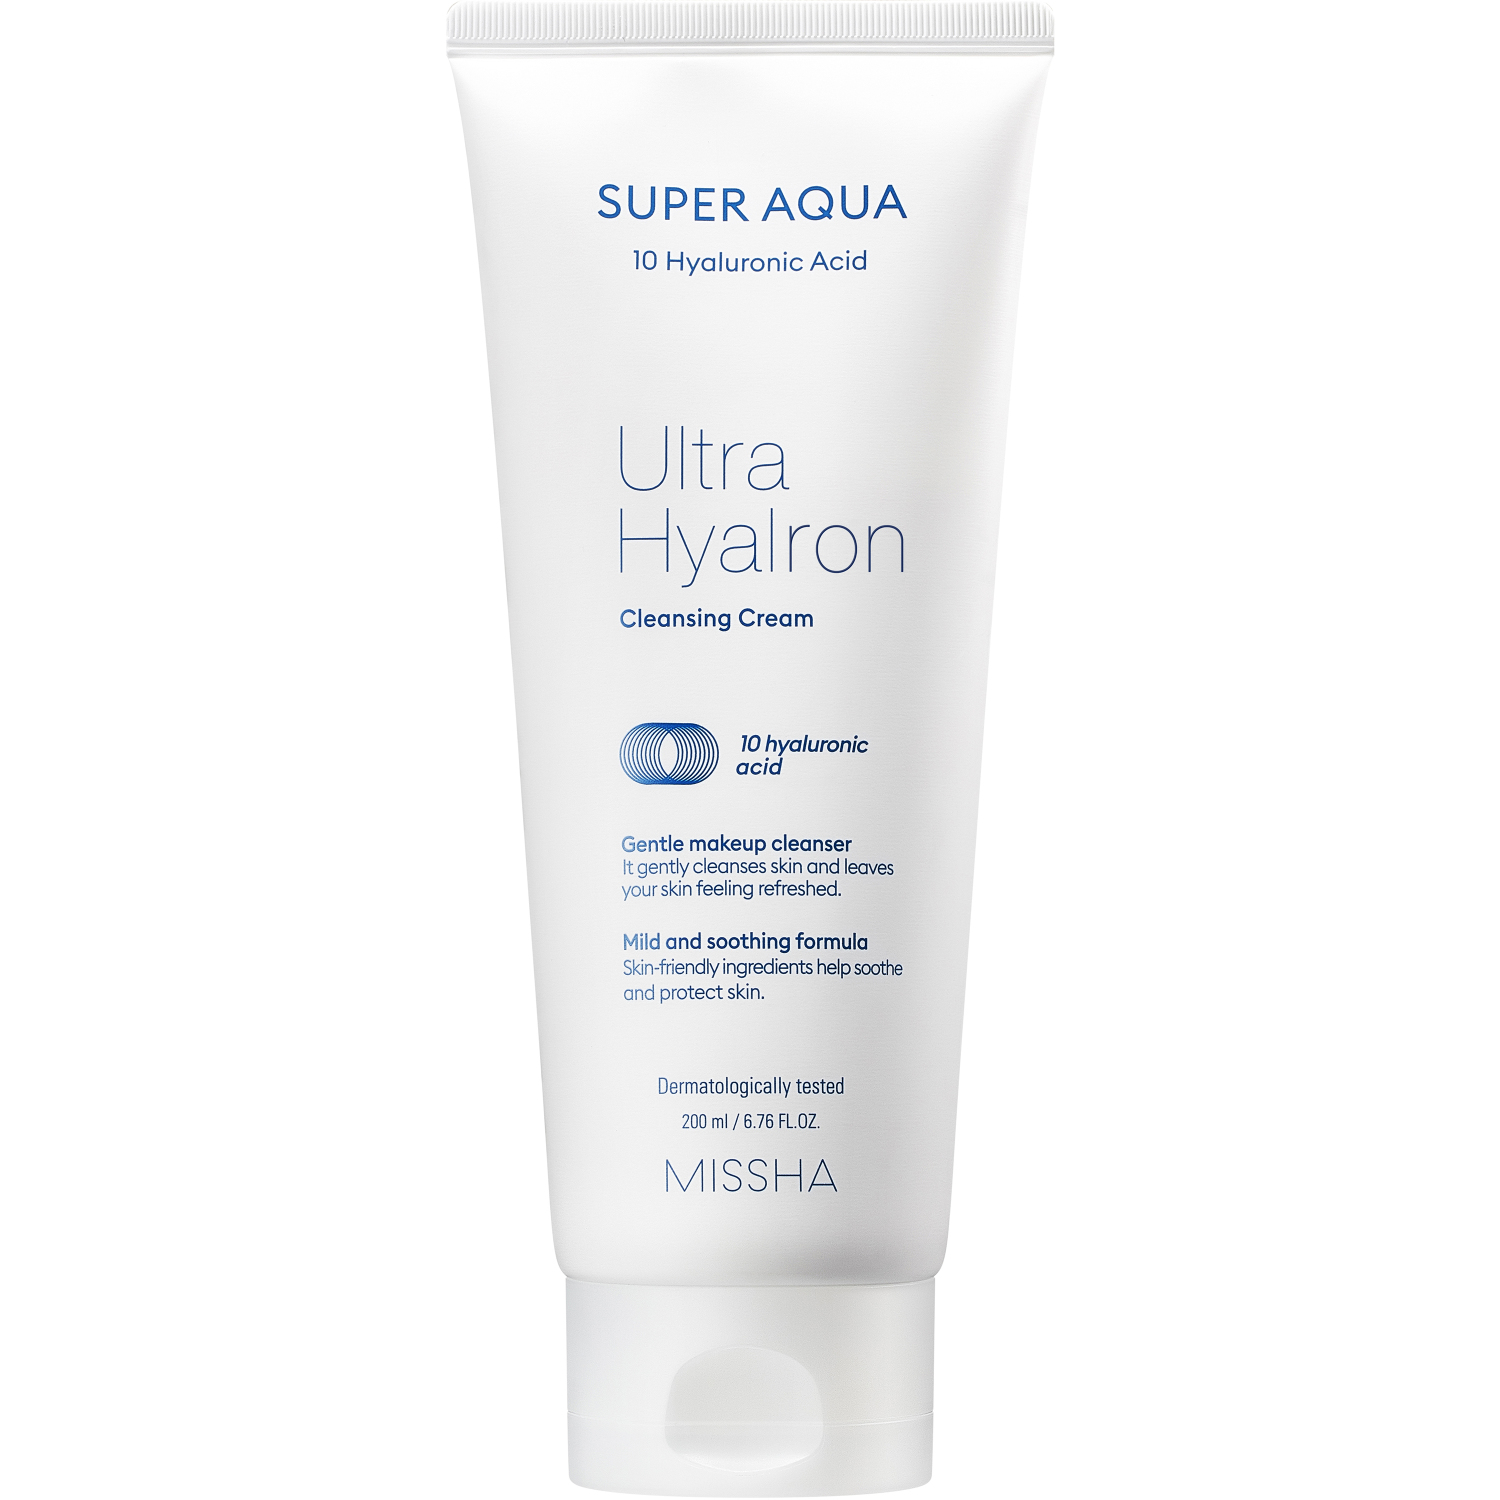 Пенка кремовая Missha Super Aqua Ultra Hyalron для умывания и снятия макияжа, 200 мл пенка для умывания для лица 150 мл